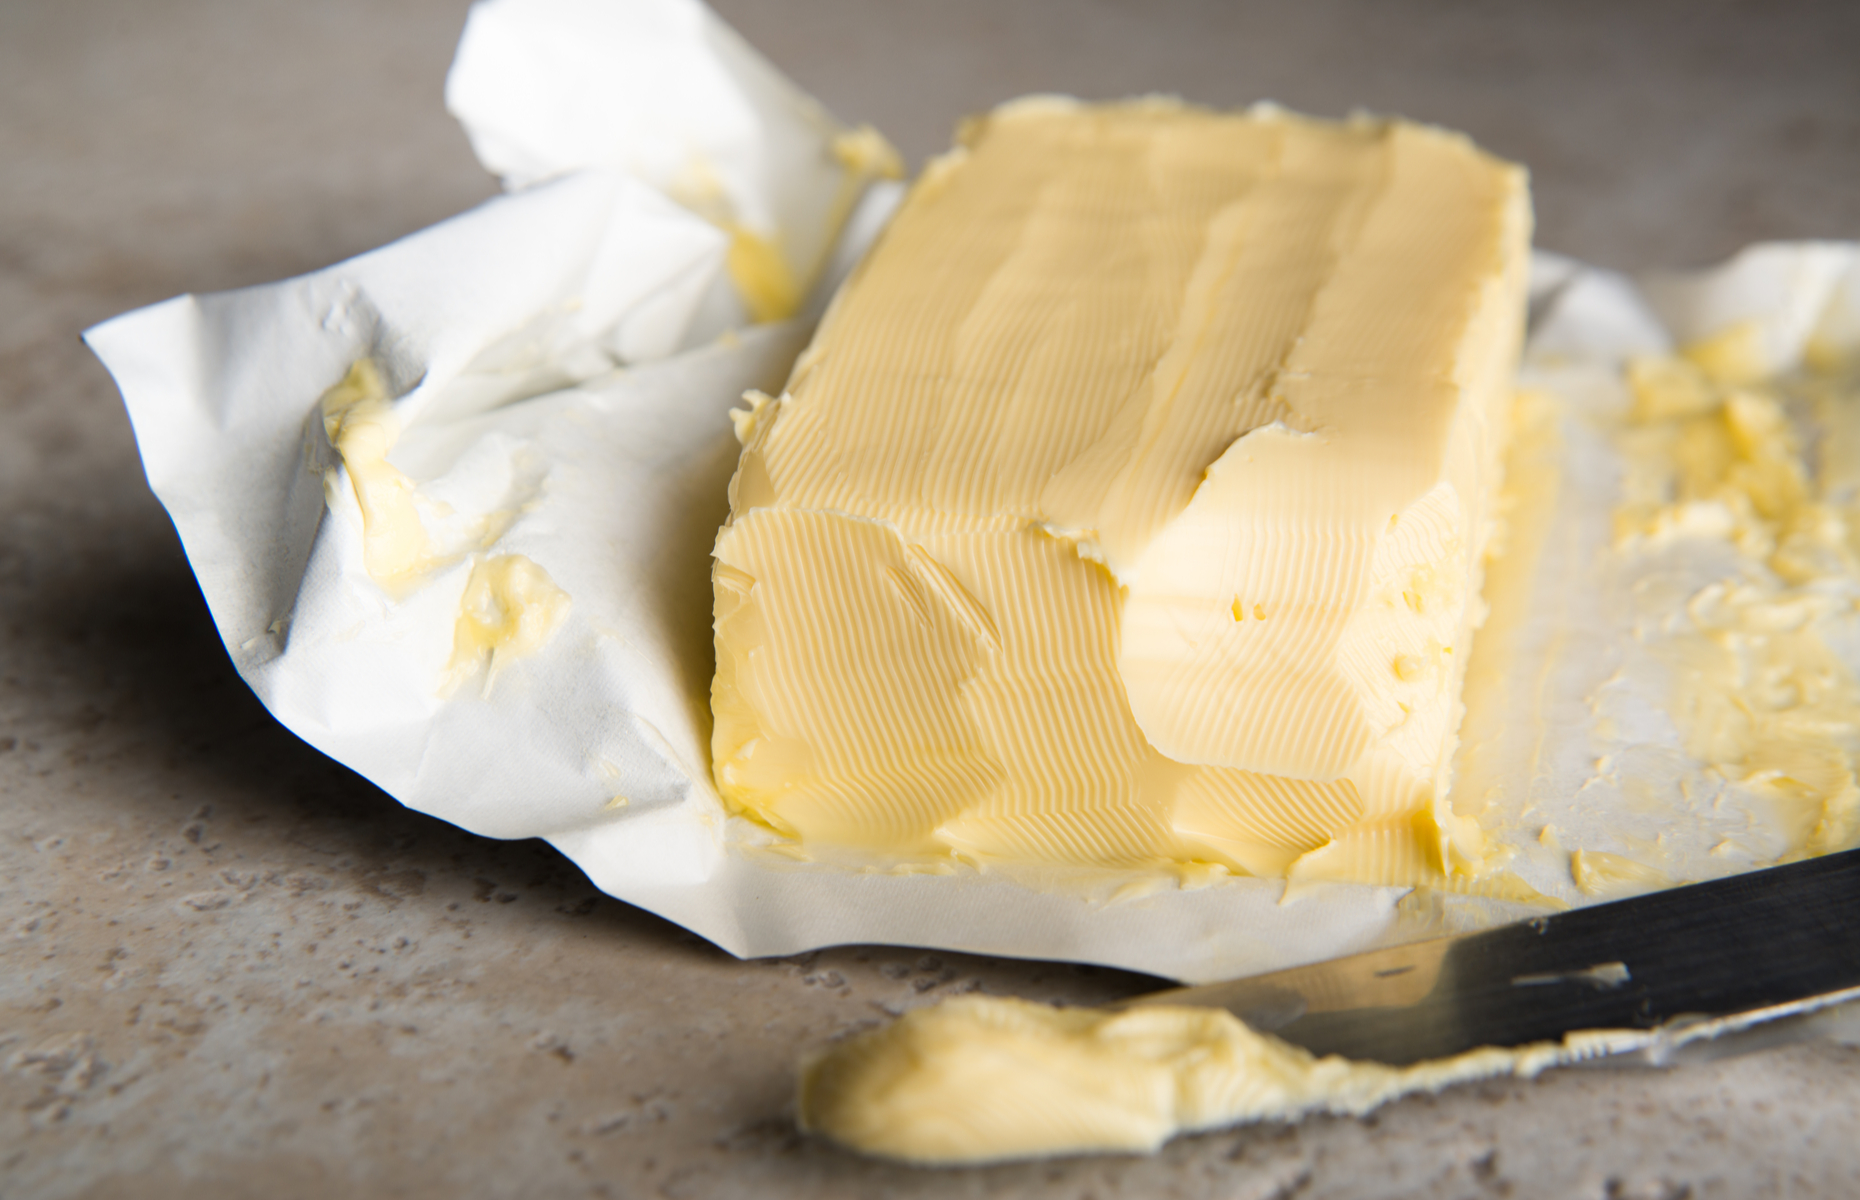 A stick of softened butter (Image: Anna Hoychuk/Shutterstock)